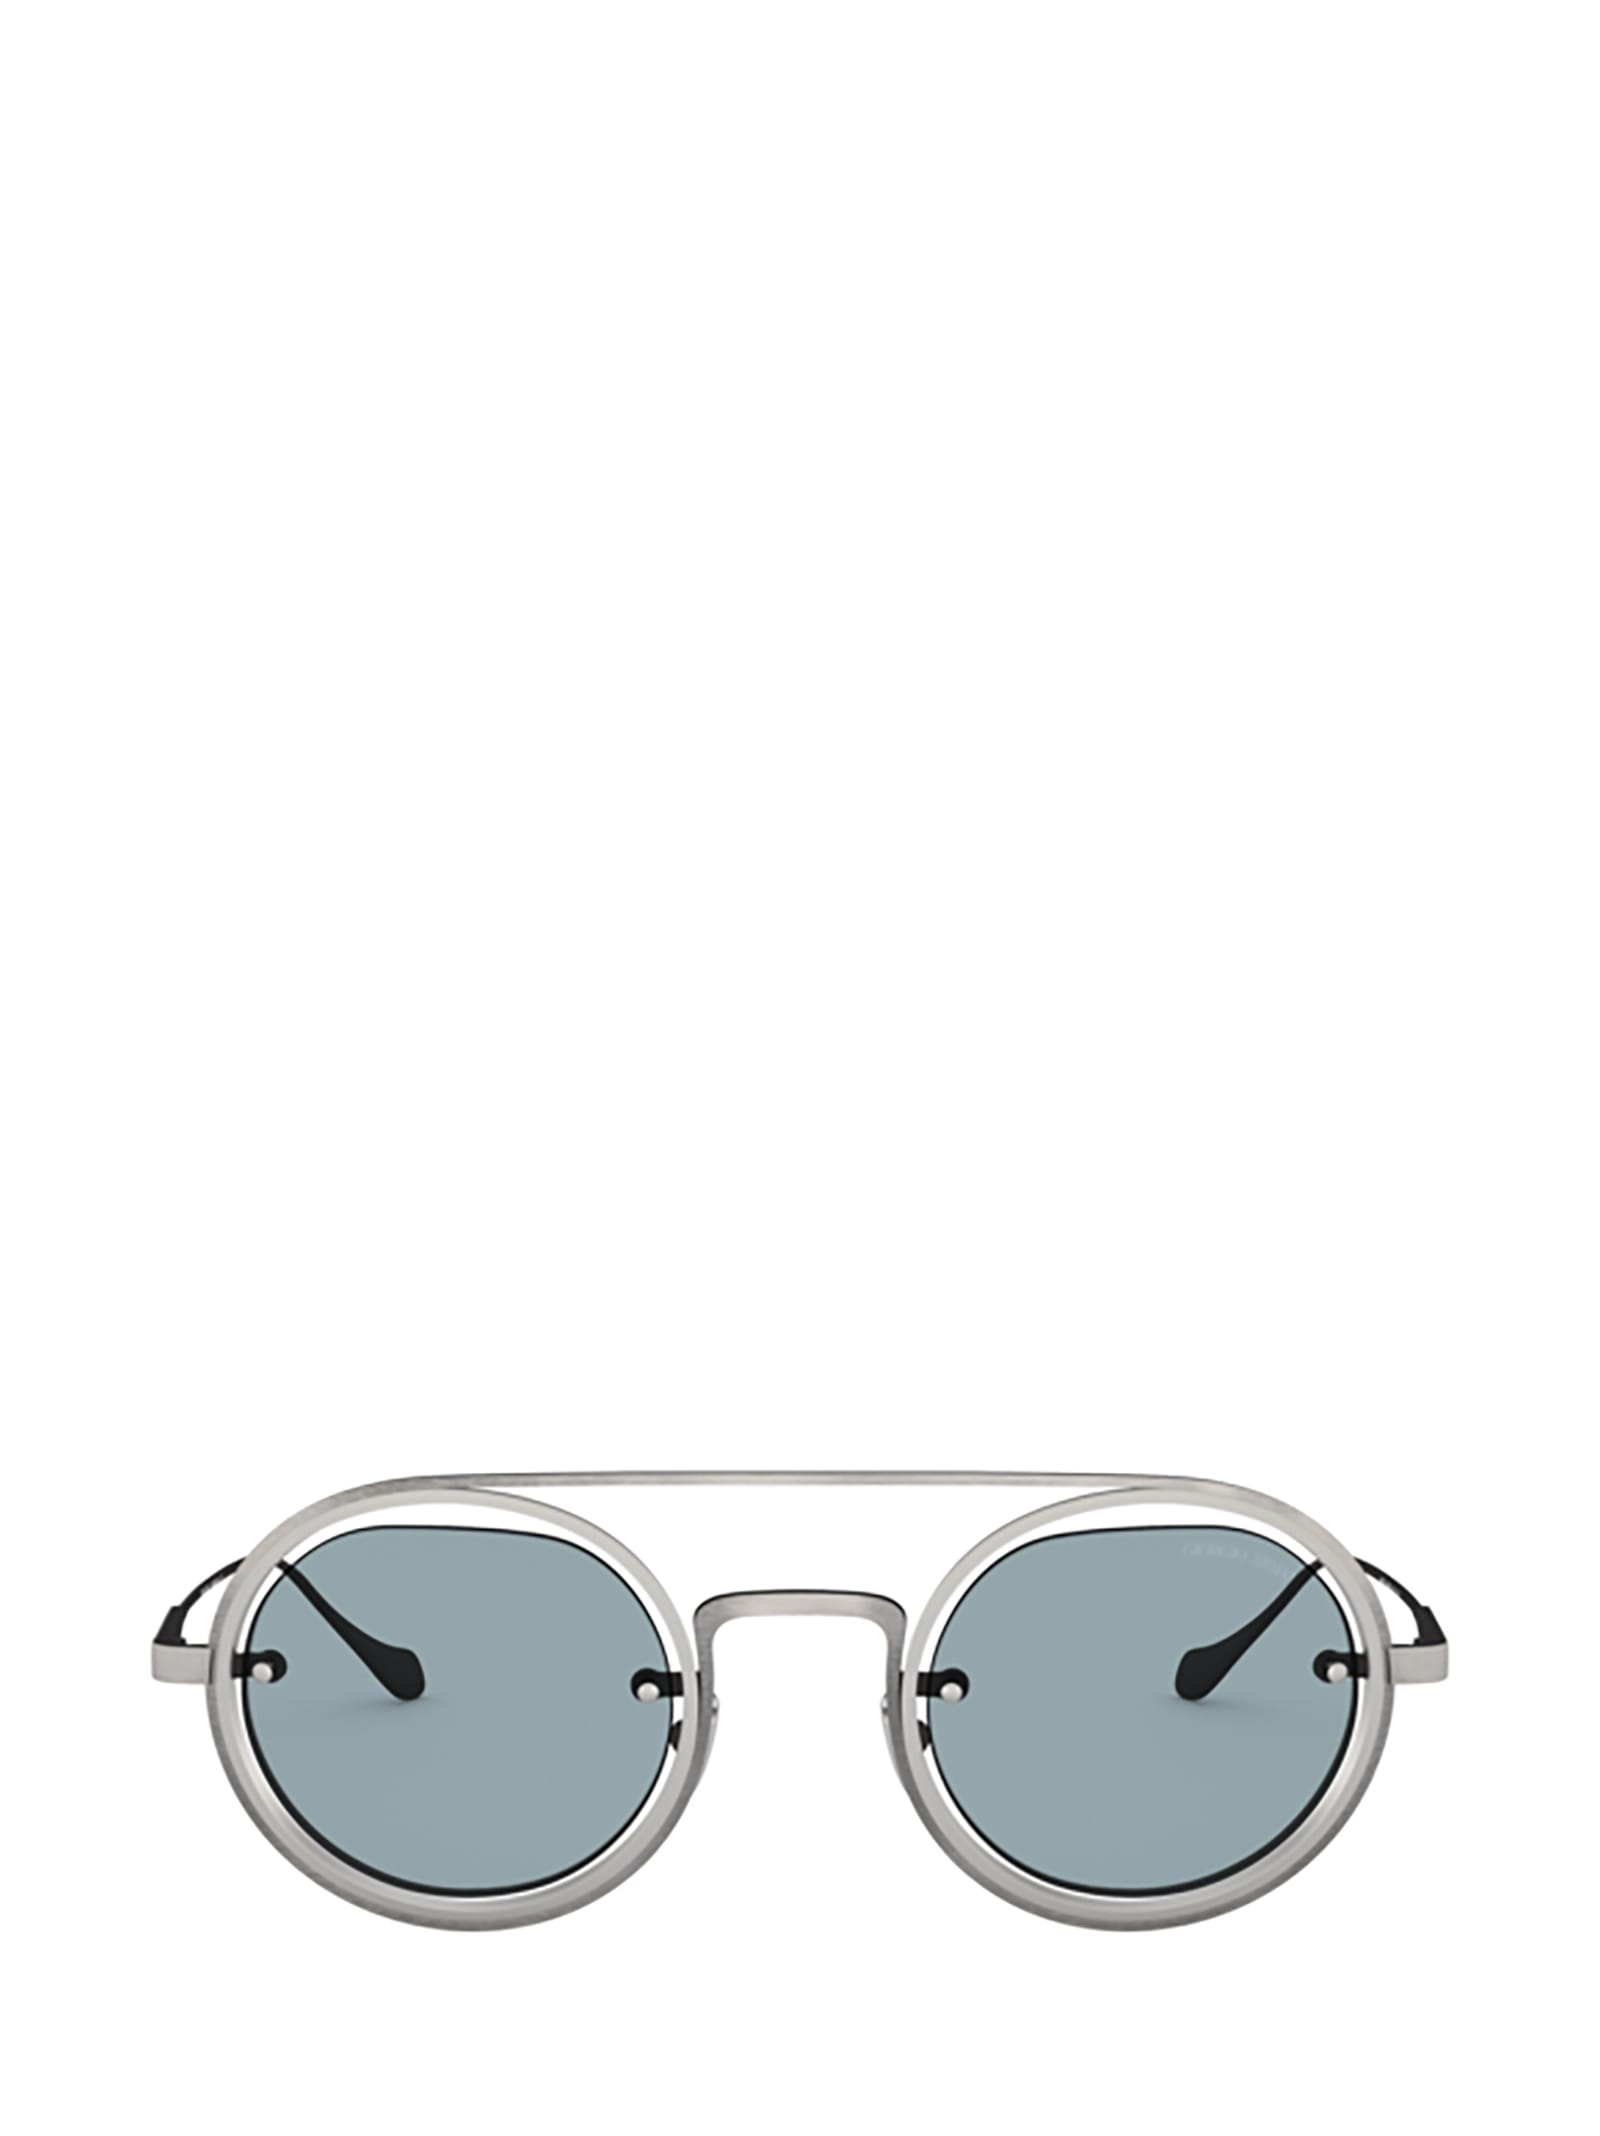 Giorgio Armani Giorgio Armani Ar6085 Brushed Grey / Matte Silver Sunglasses